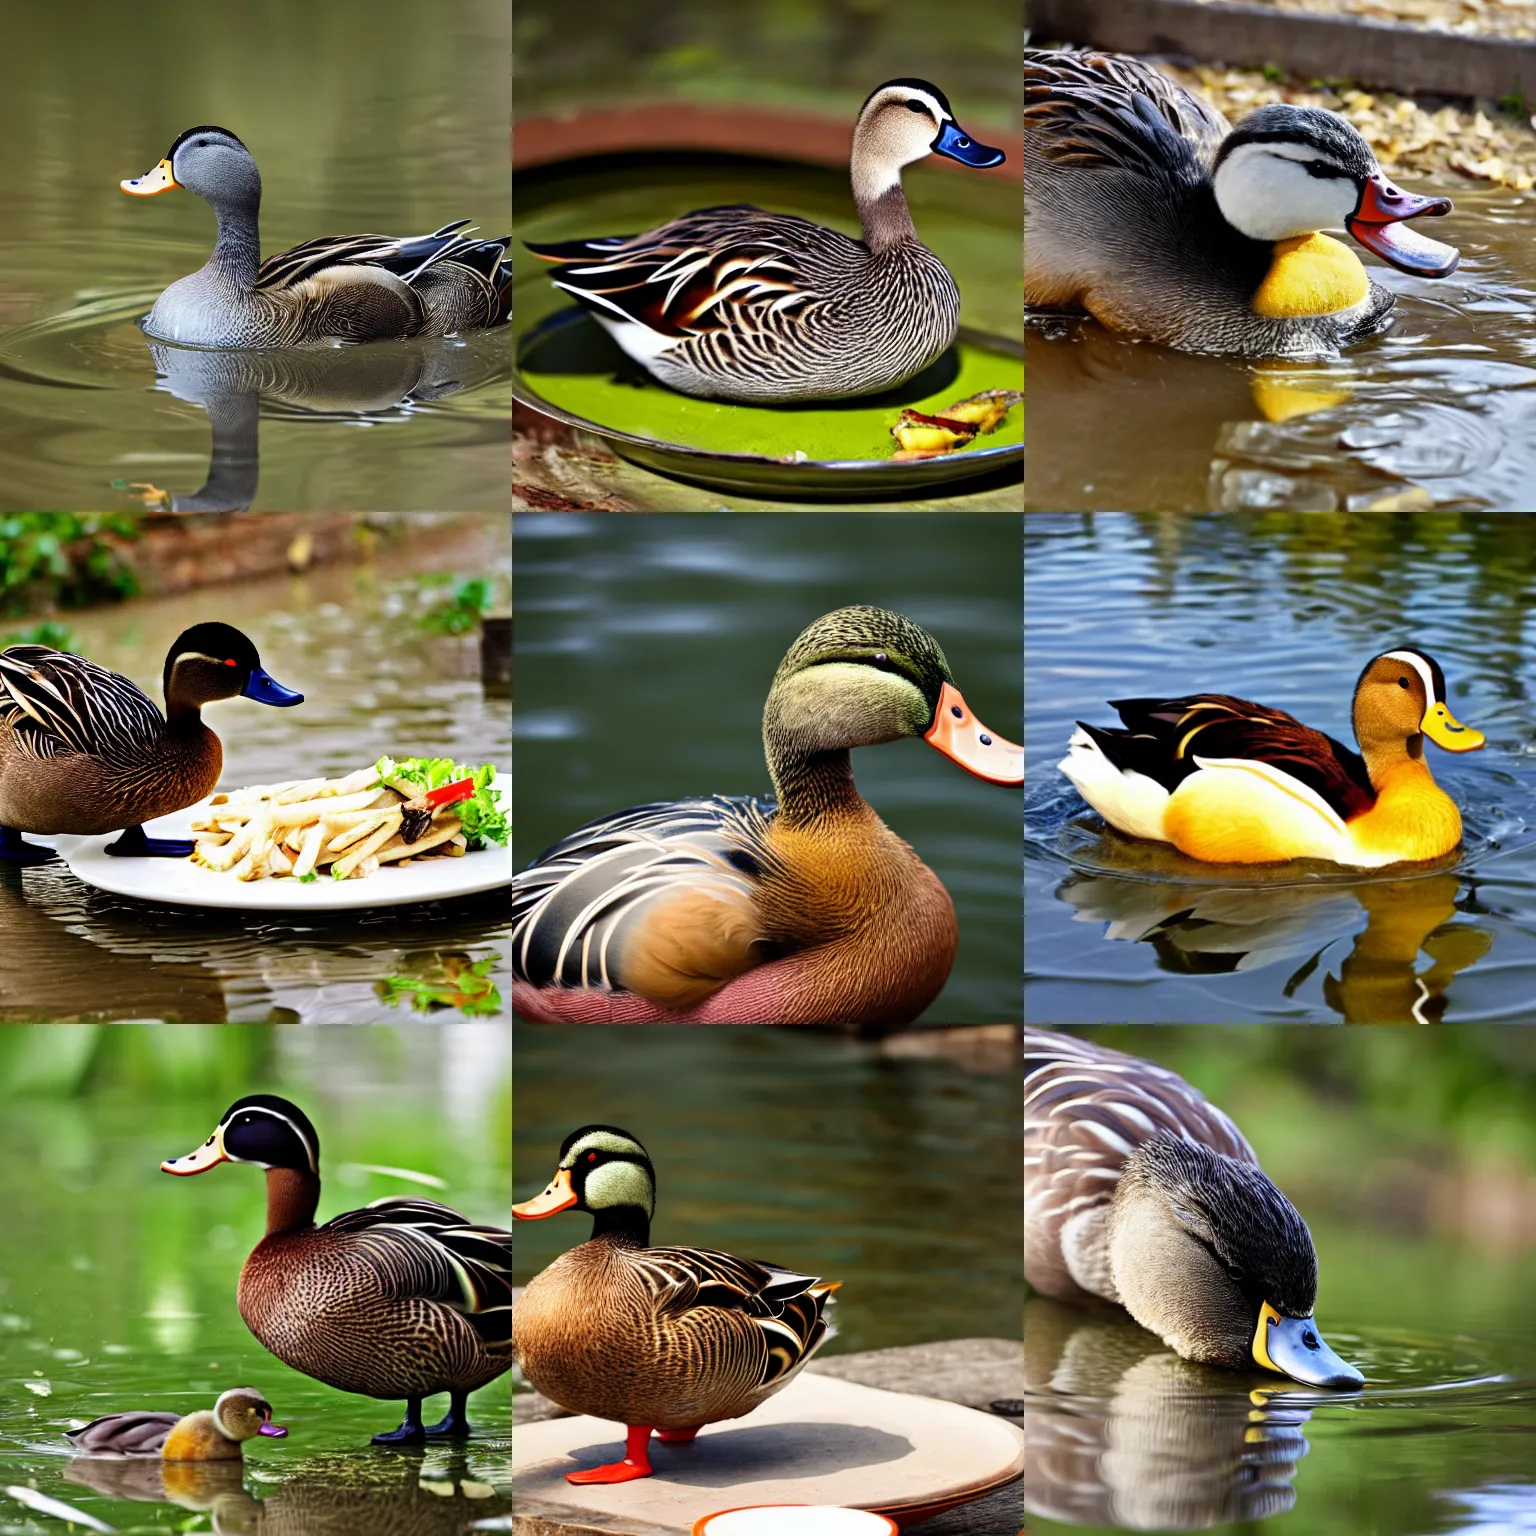 Prompt: a duck enjoying food